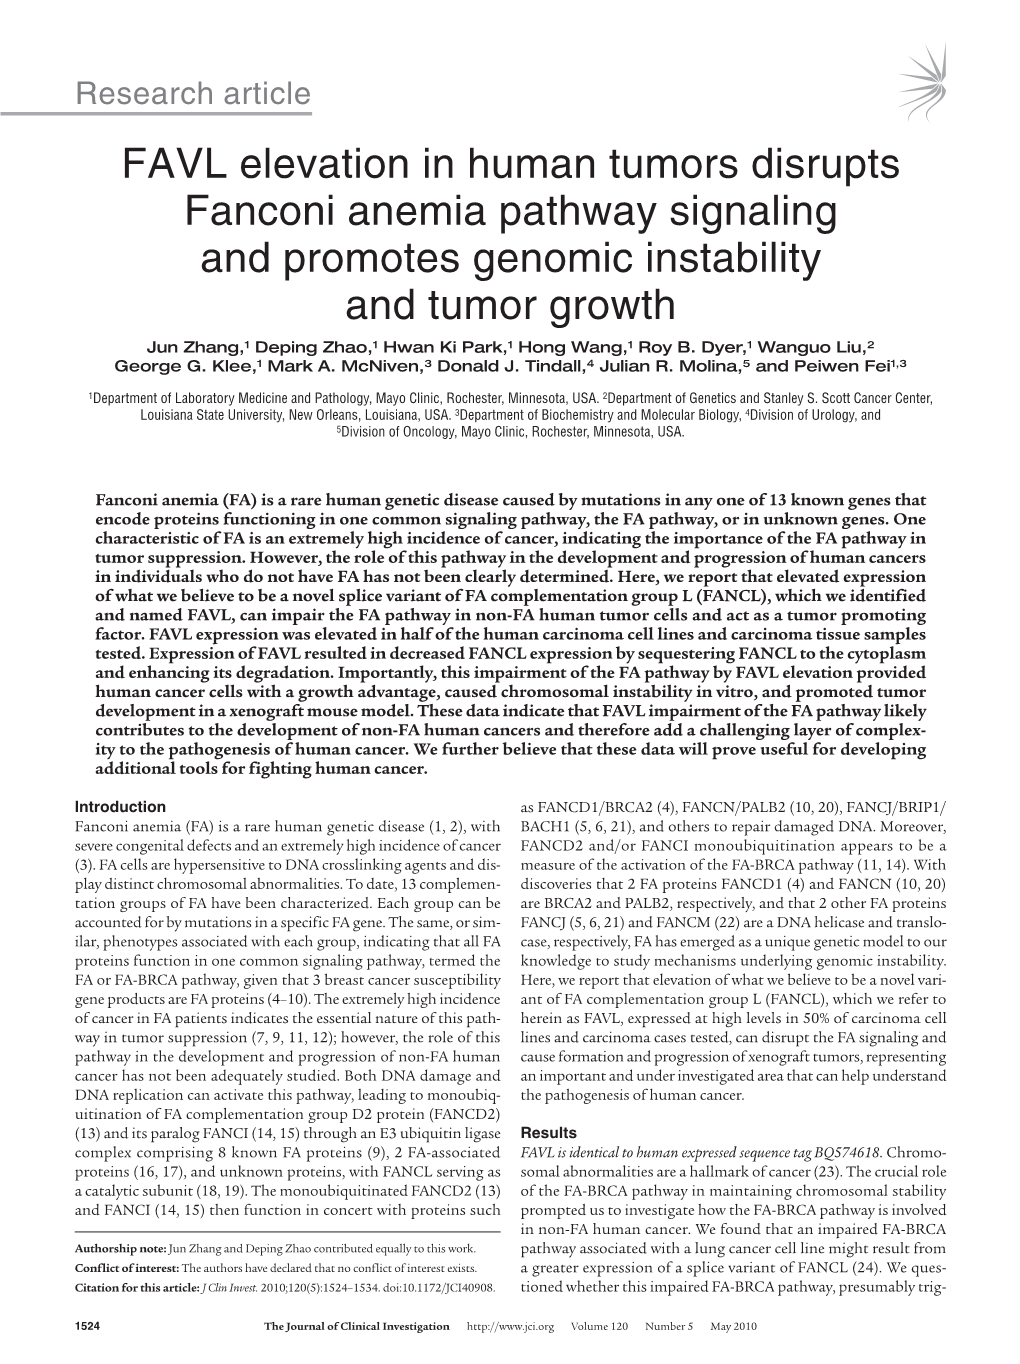 FAVL Elevation in Human Tumors Disrupts Fanconi Anemia Pathway